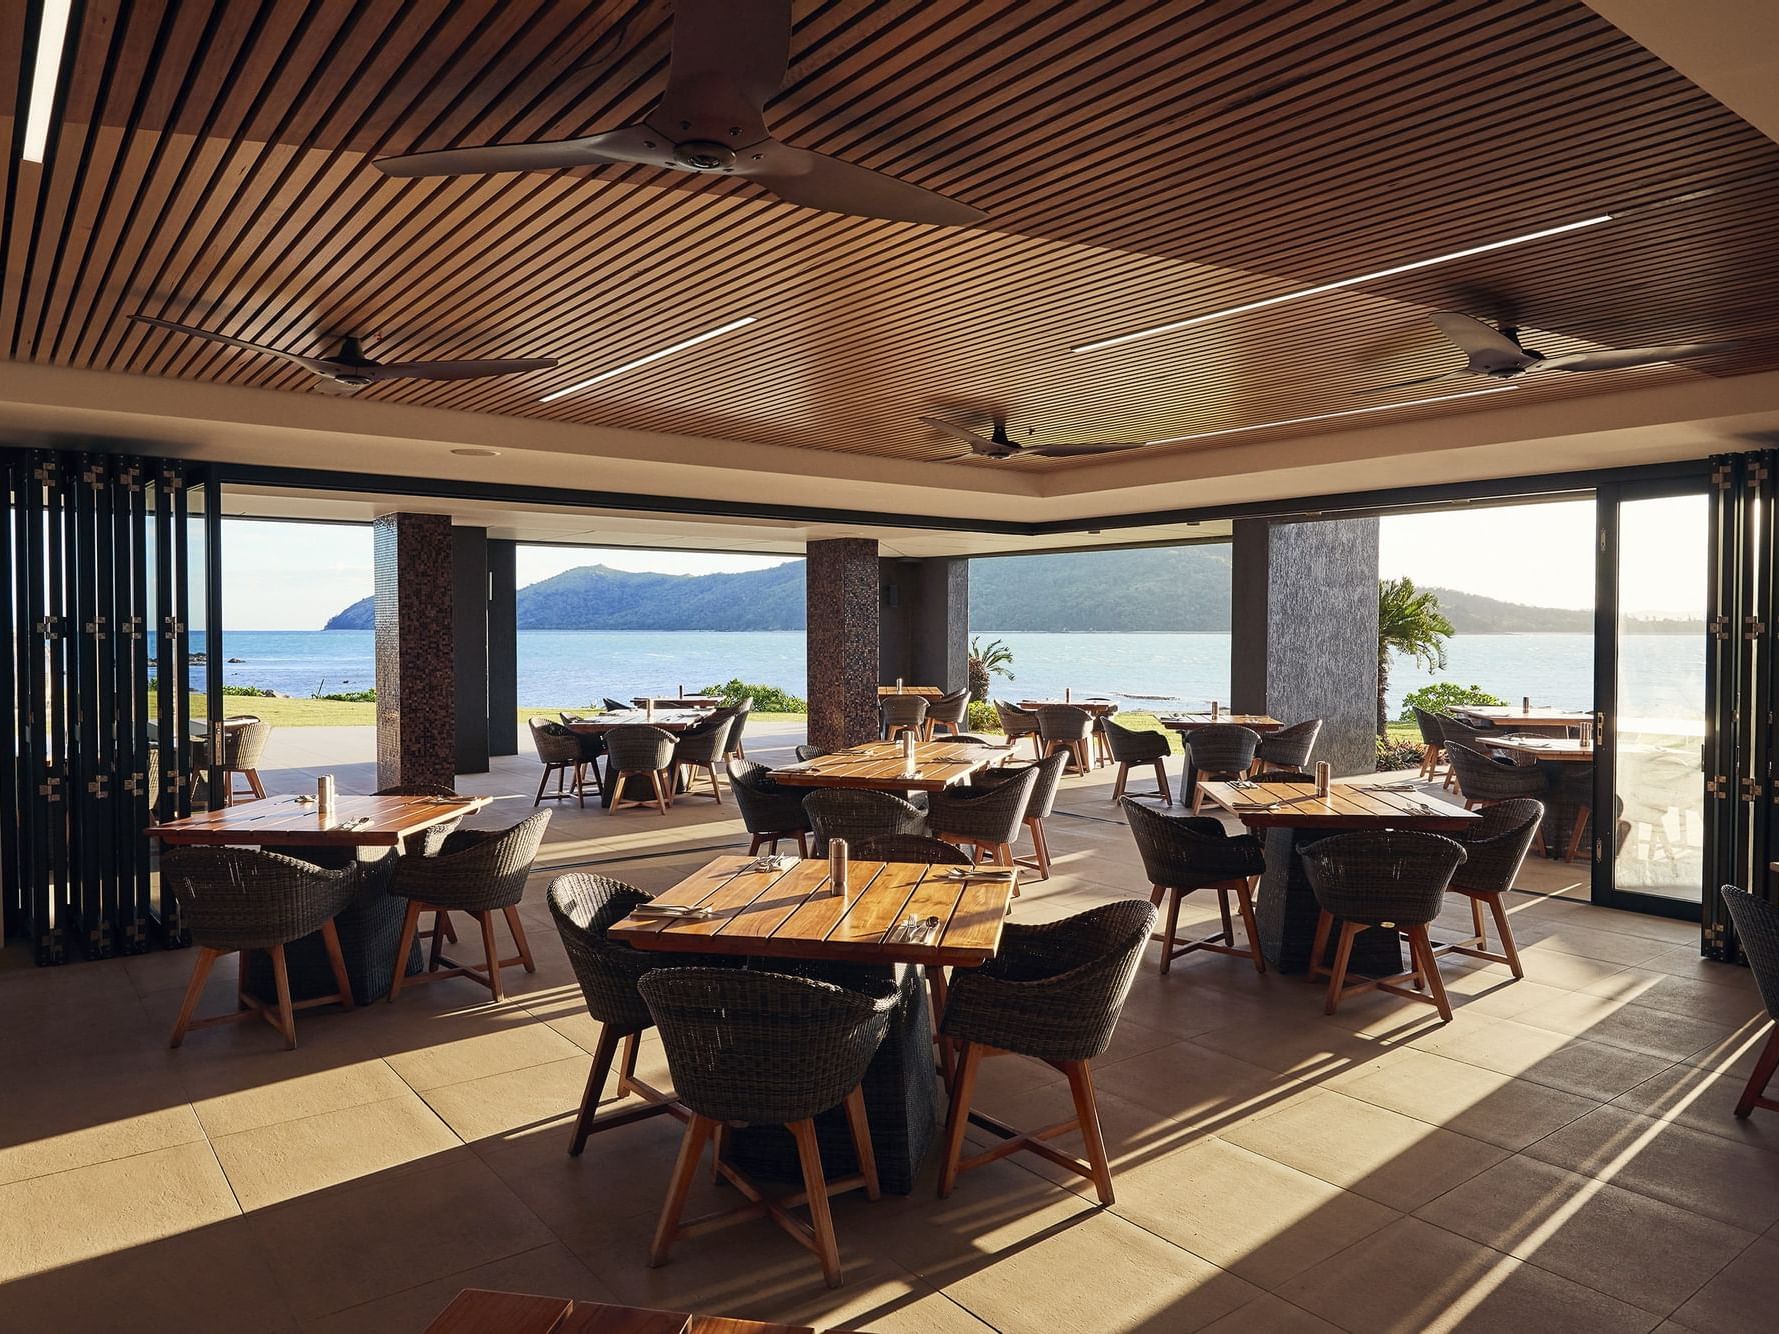 Dining area in Inkstone Kitchen & Bar at Daydream Island Resort